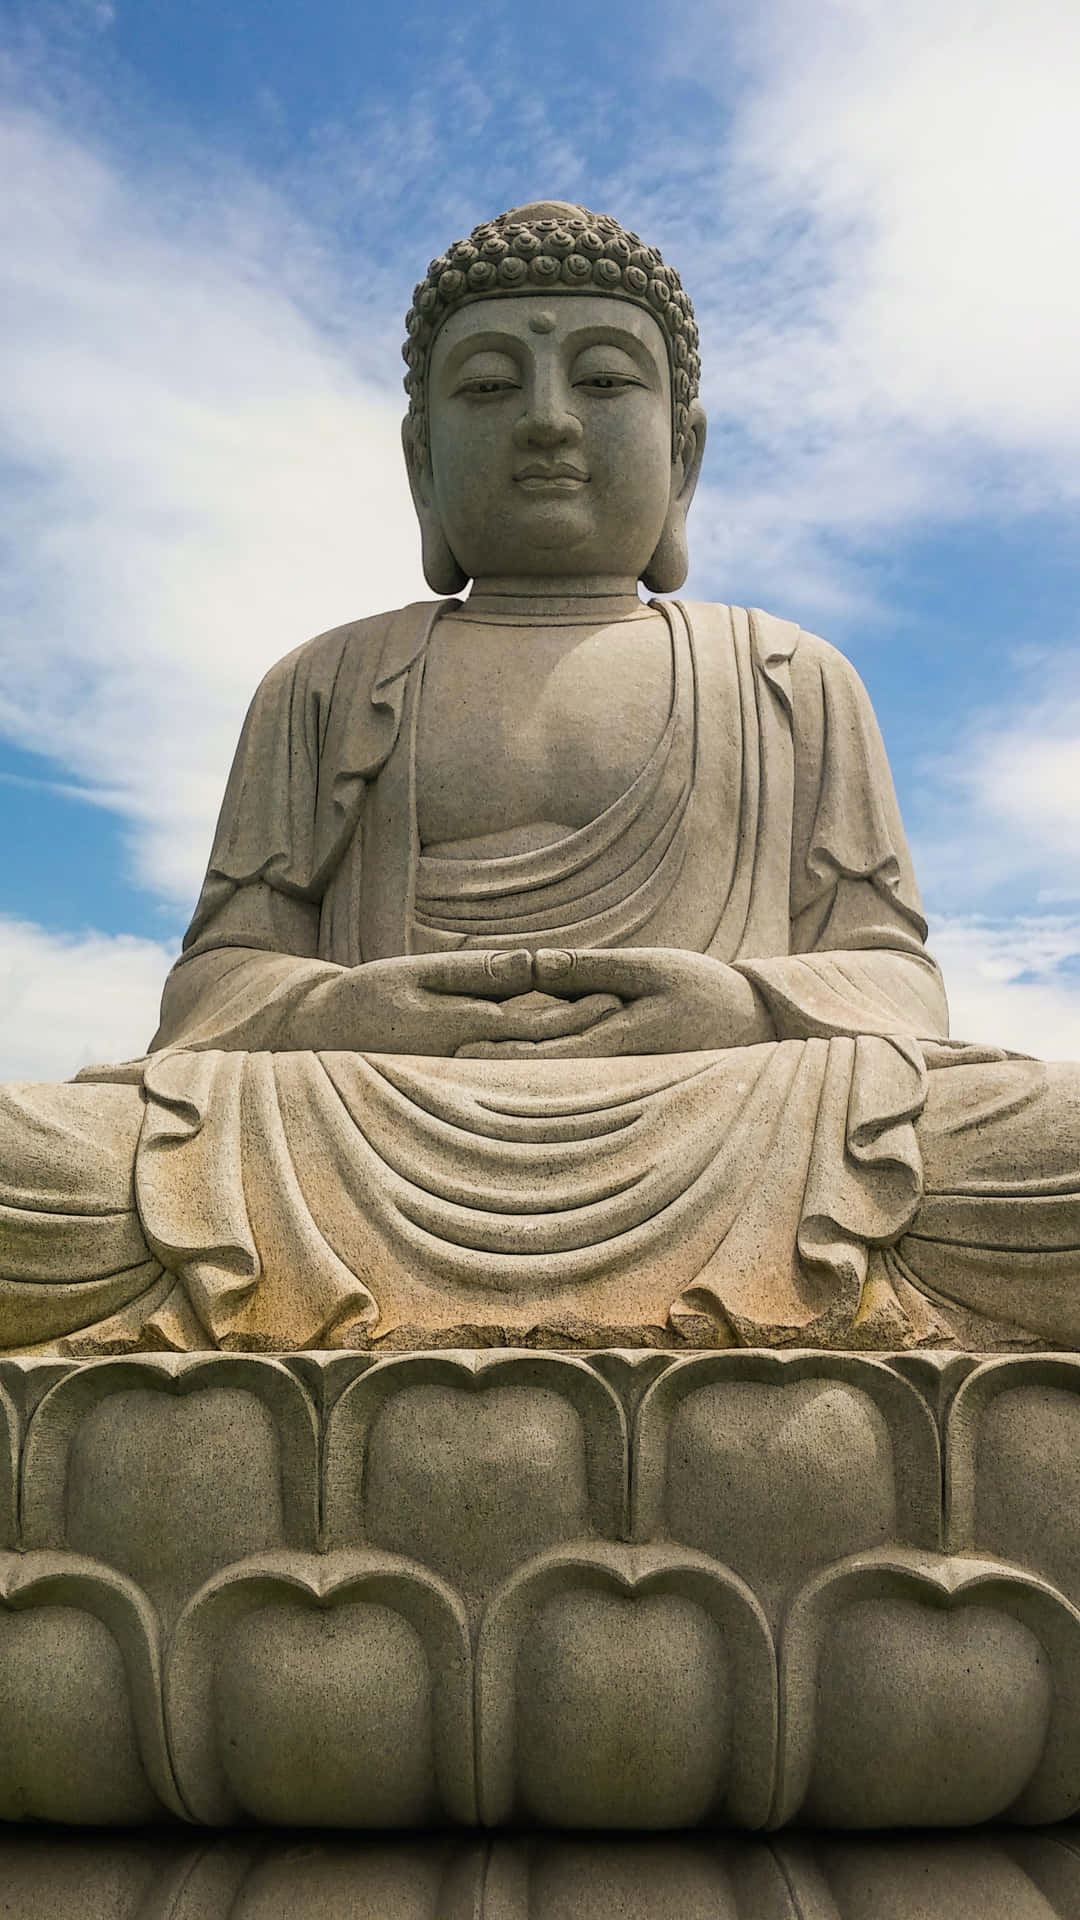 Enlightening Aura - A Serene Depiction Of Buddha